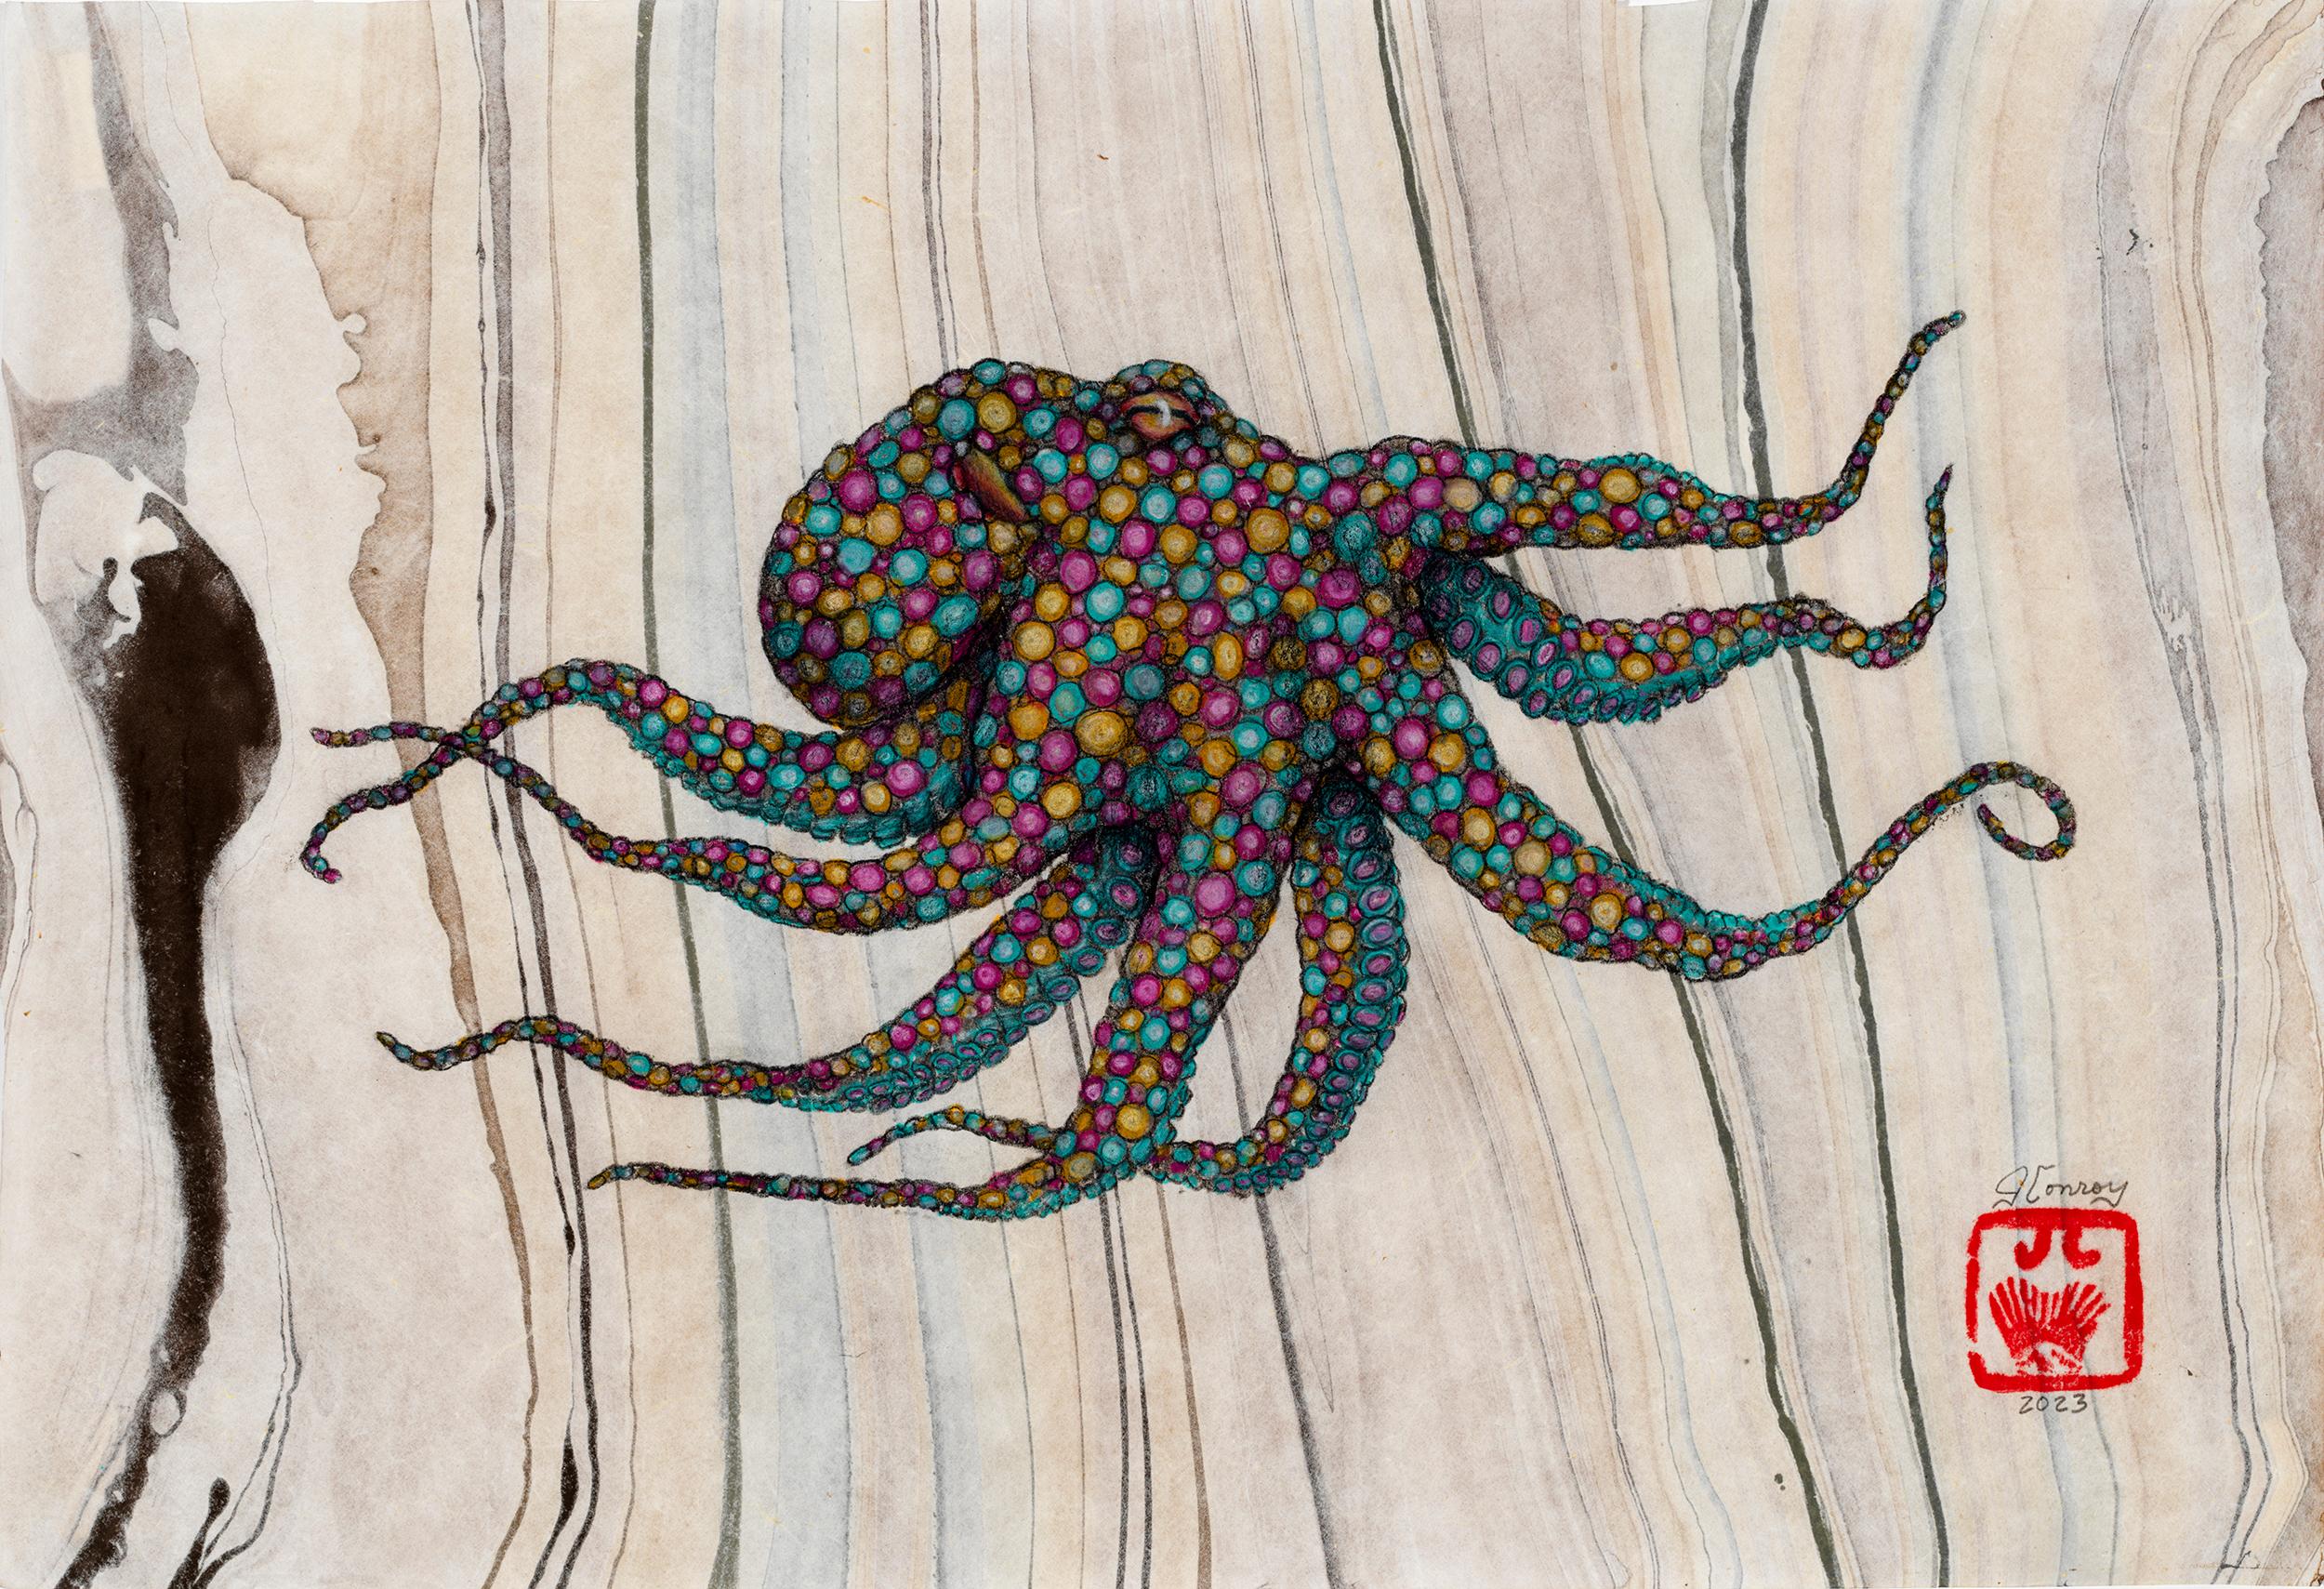 Jeff Conroy Animal Painting - Resplendent Rascal - Gyotaku Style Sumi Ink Painting of an Octopus 